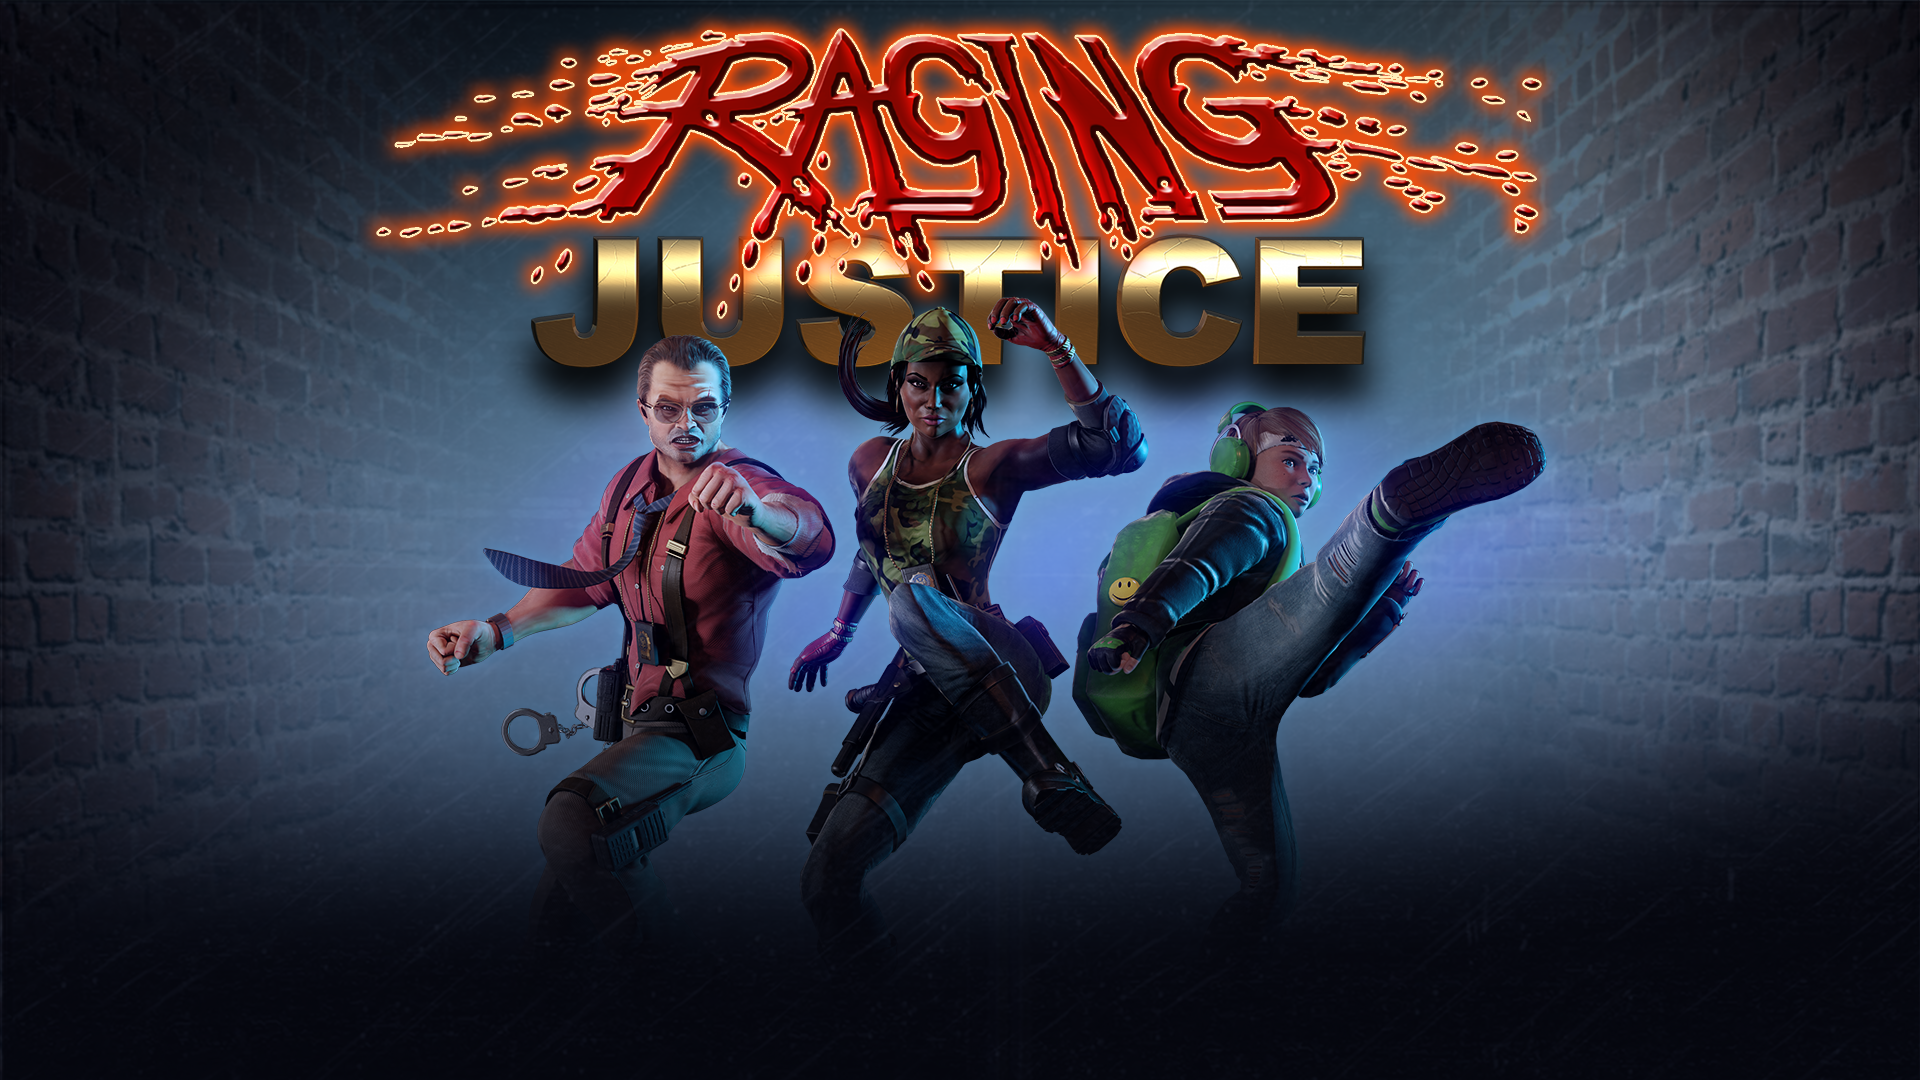 Raging Justice - MakinGames Ltd